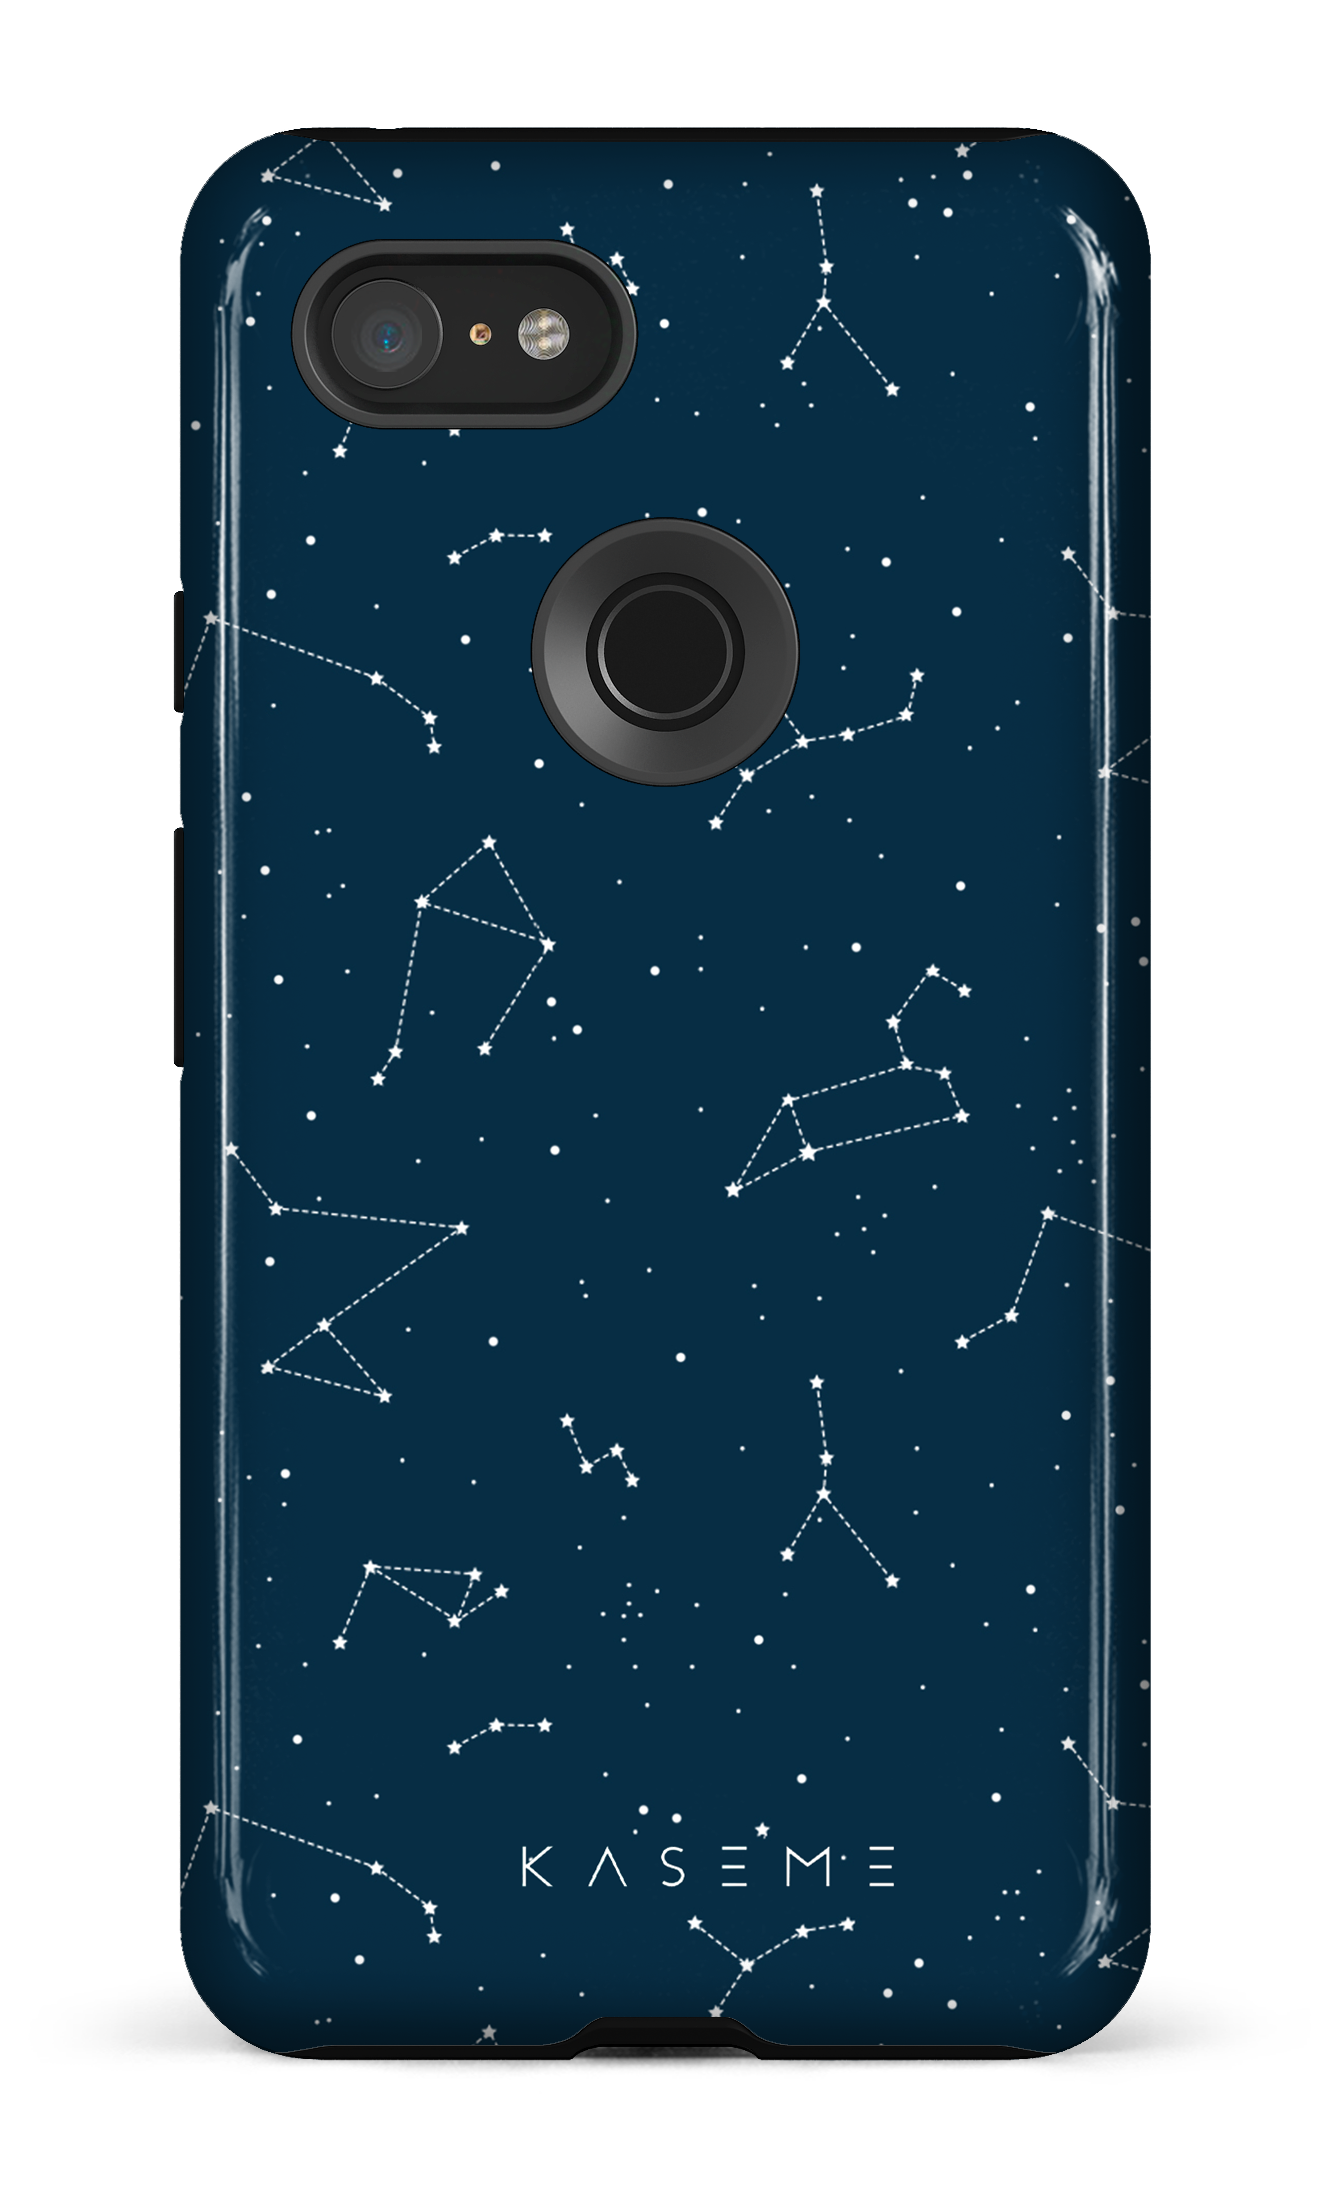 Cosmos - Google Pixel 3 XL